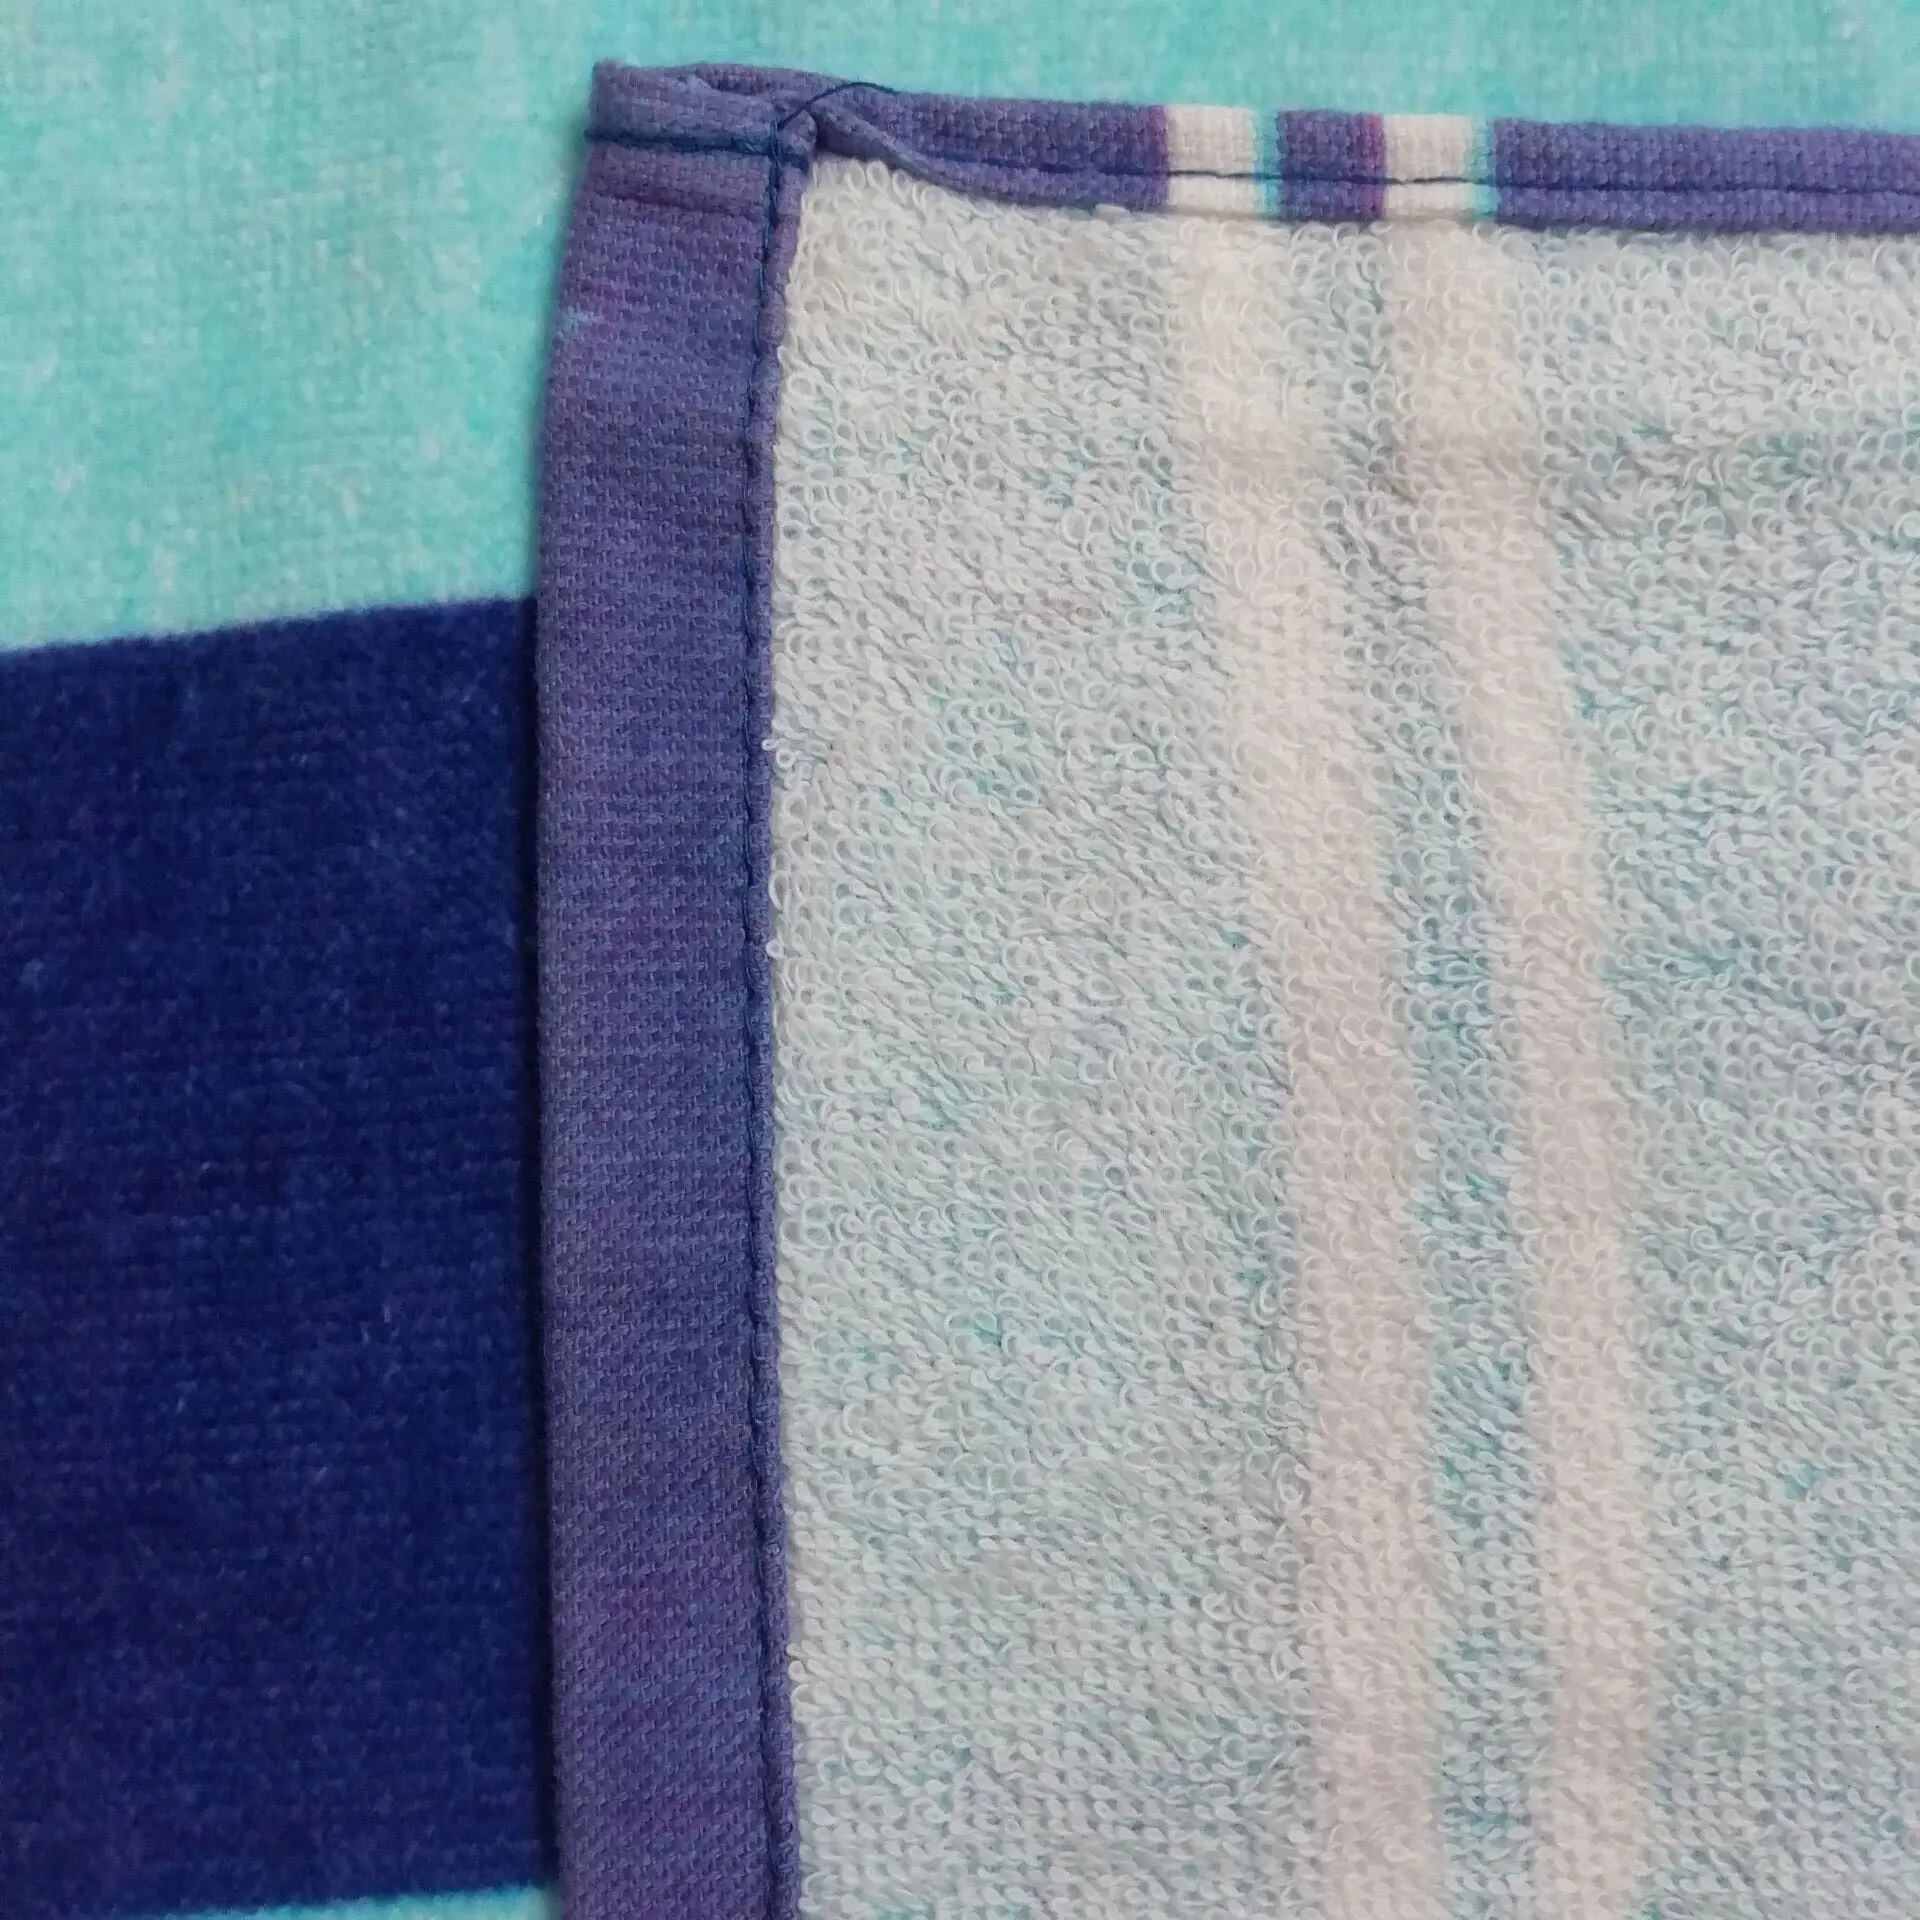 Asciugamano da spiaggia a righe in lino bianco blu diretto in fabbrica asciugamani extra large da spiaggia 100% cotone asciugamani da spiaggia in cotone organico sottile